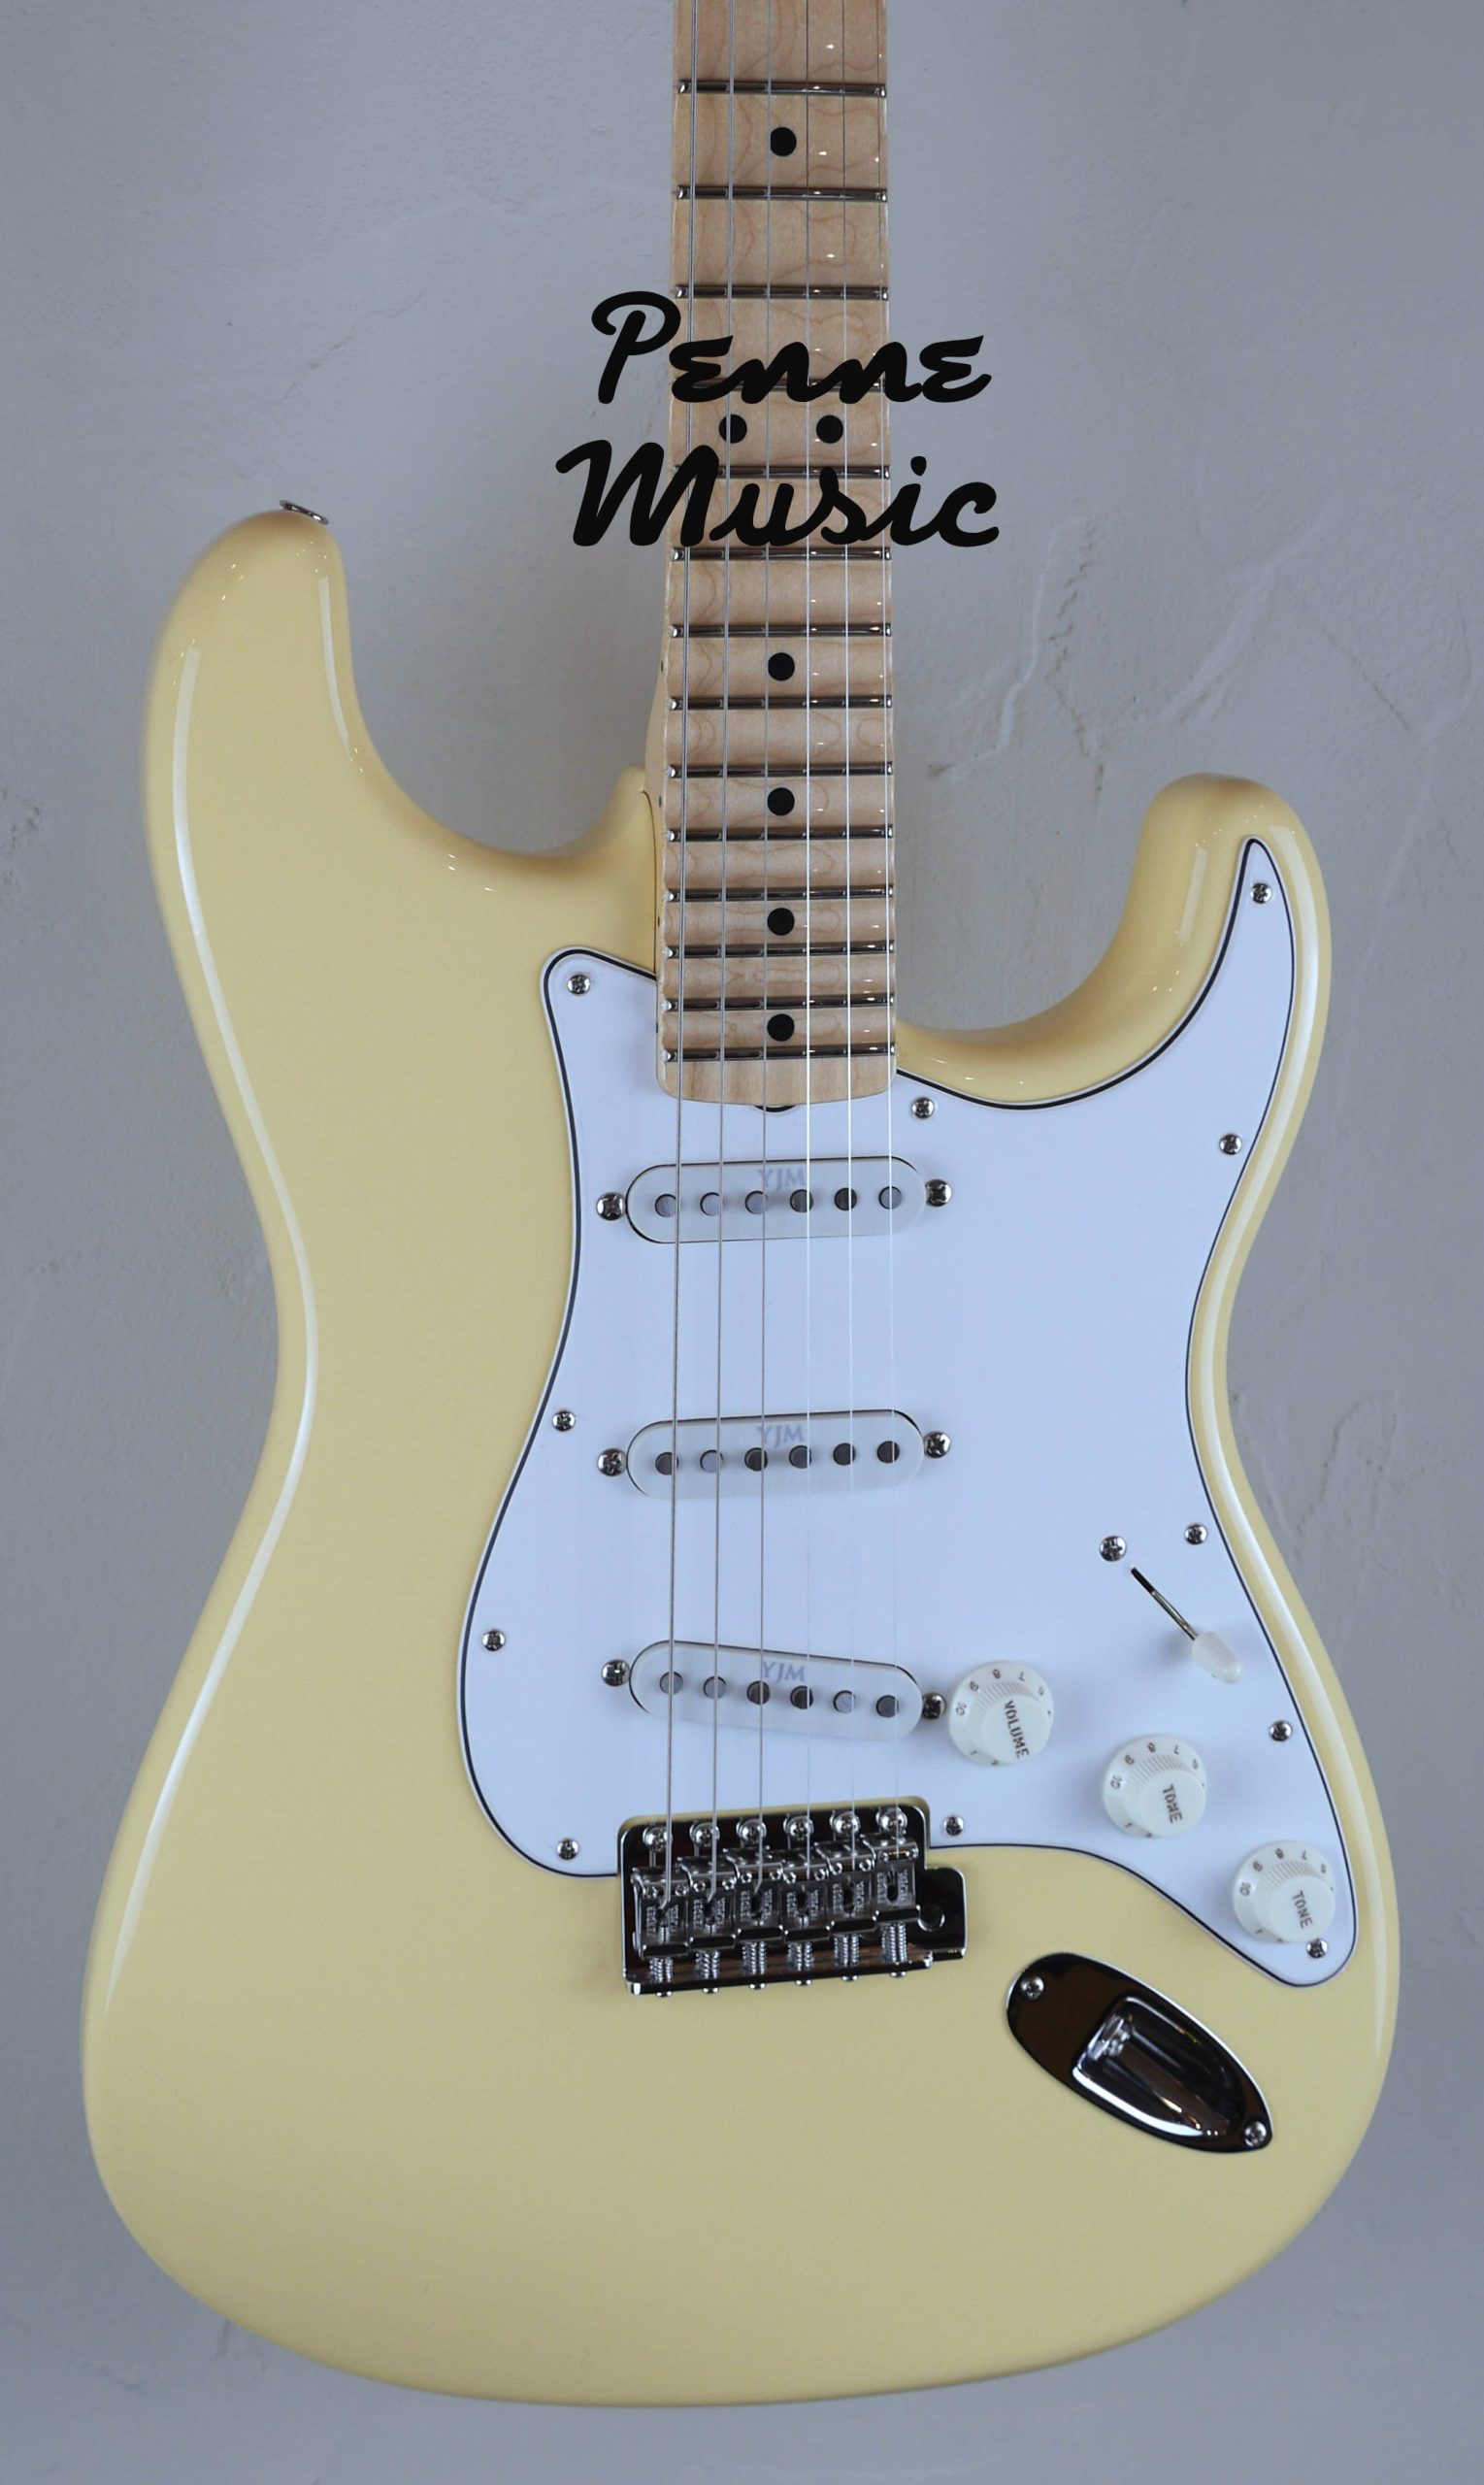 Fender Custom Shop Yngwie Malmsteen Stratocaster Vintage White NOS 4